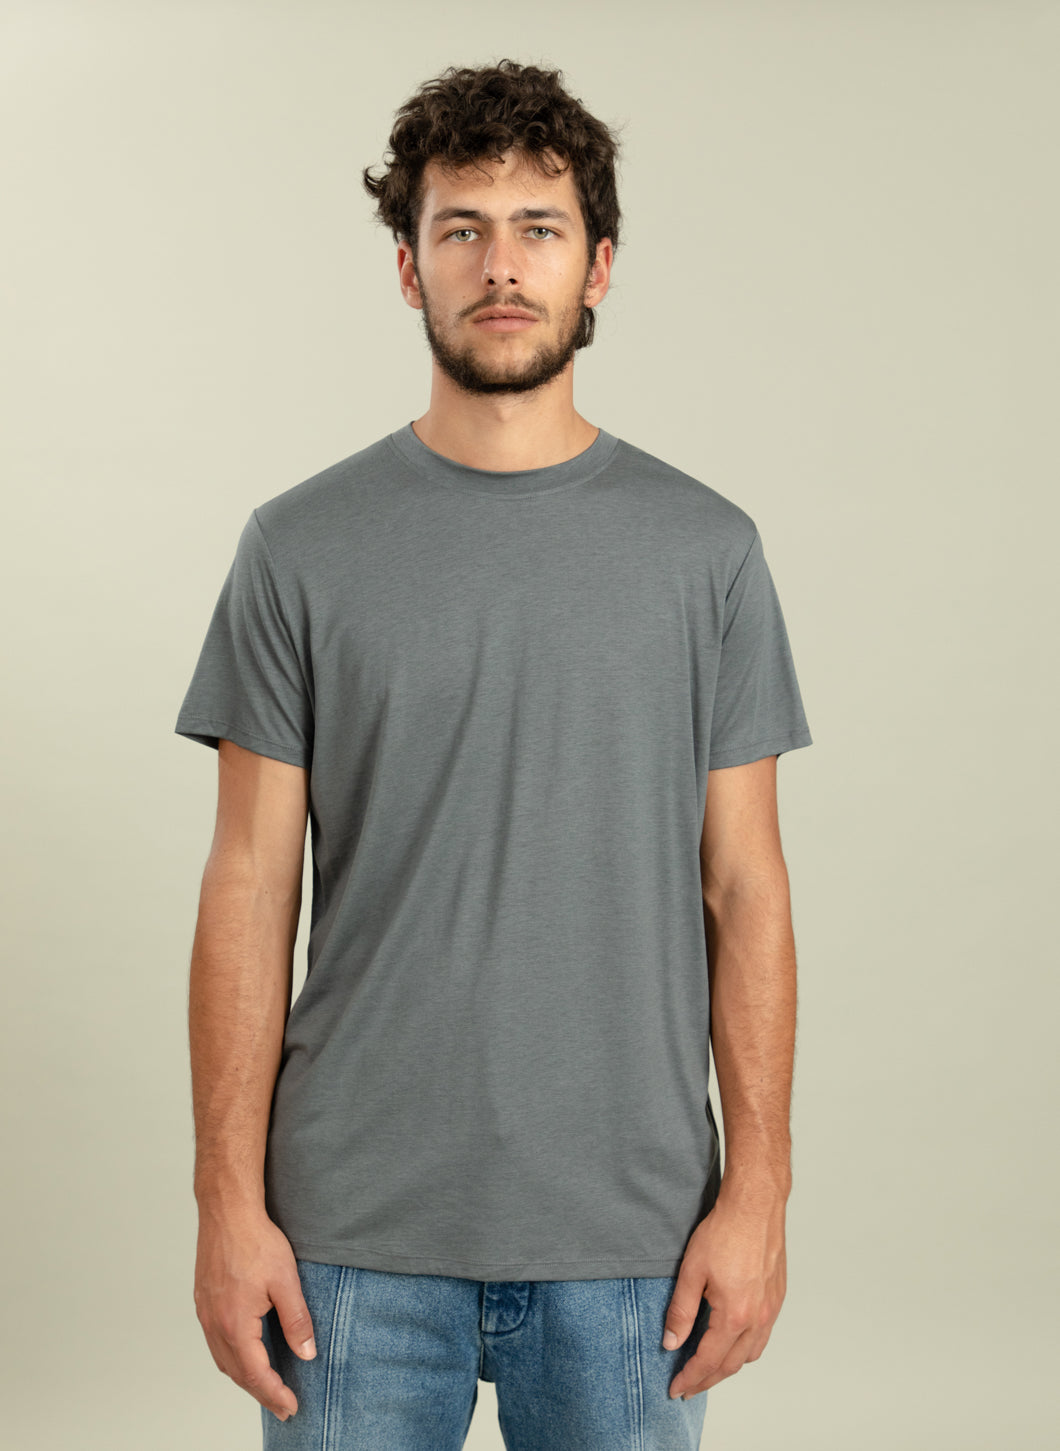 Short Sleeve T-Shirt in Lead Grey Eucalyptus & Cotton